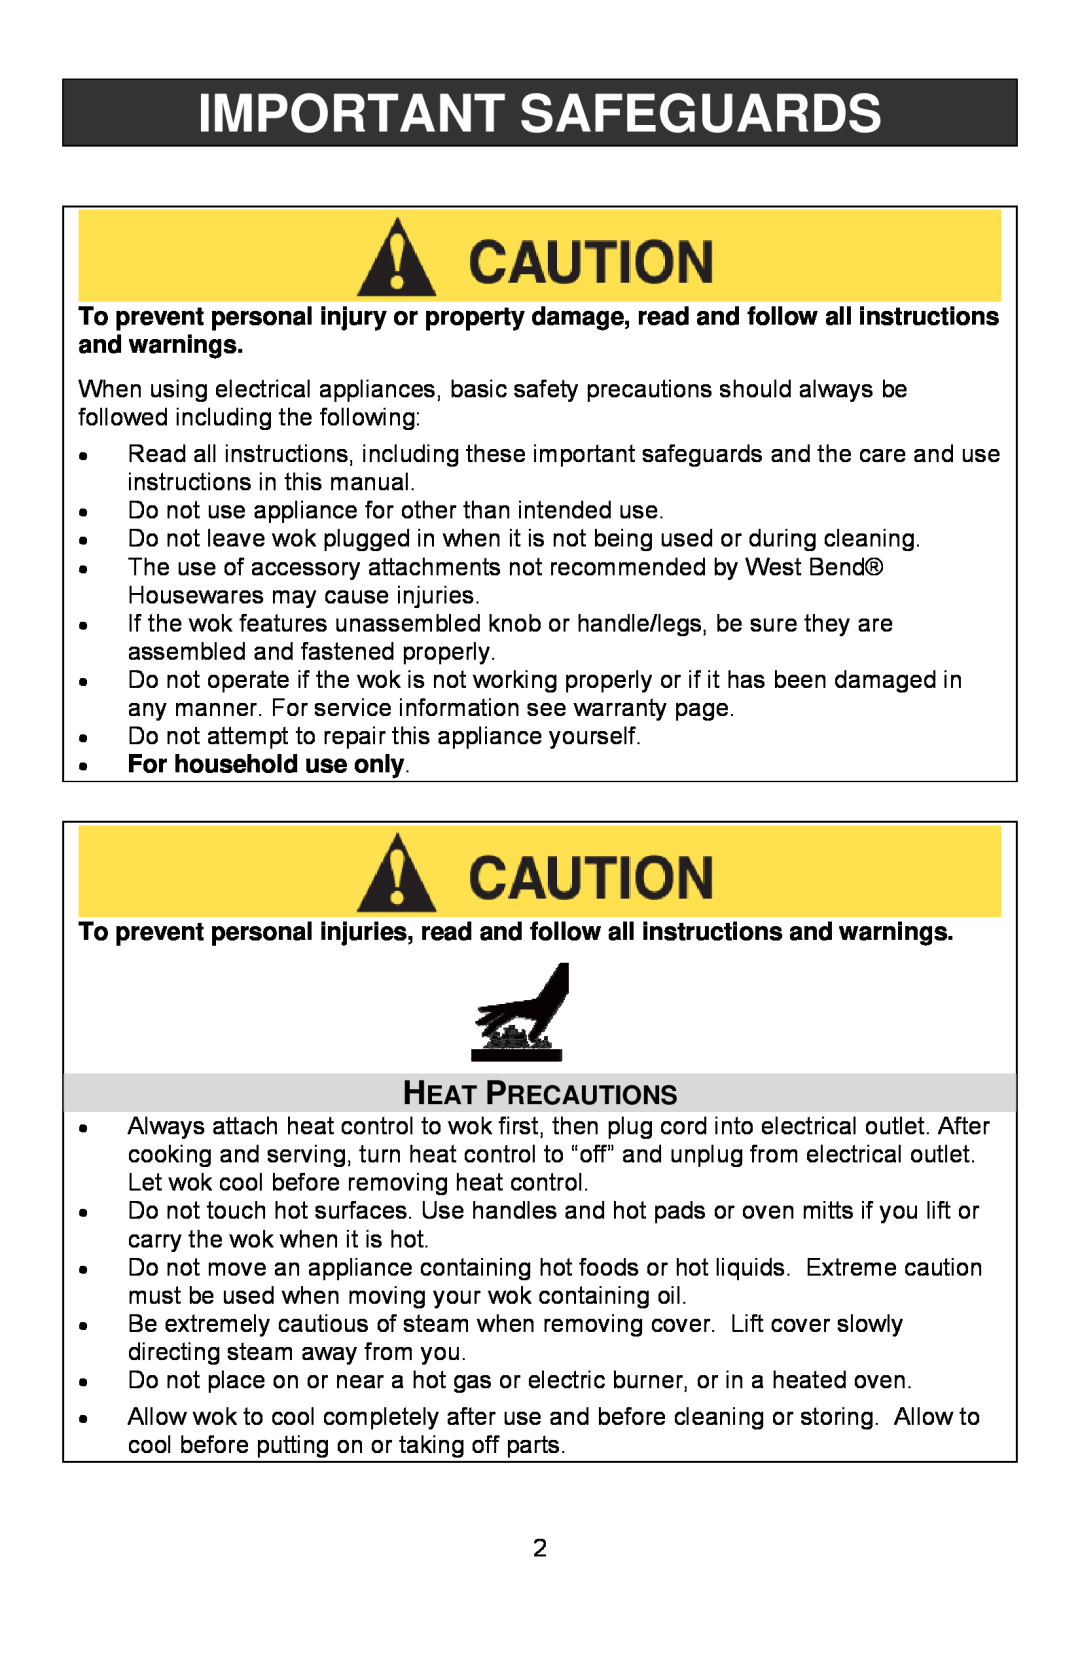 West Bend Housewares Electric Wok instruction manual Important Safeguards, Heat Precautions 